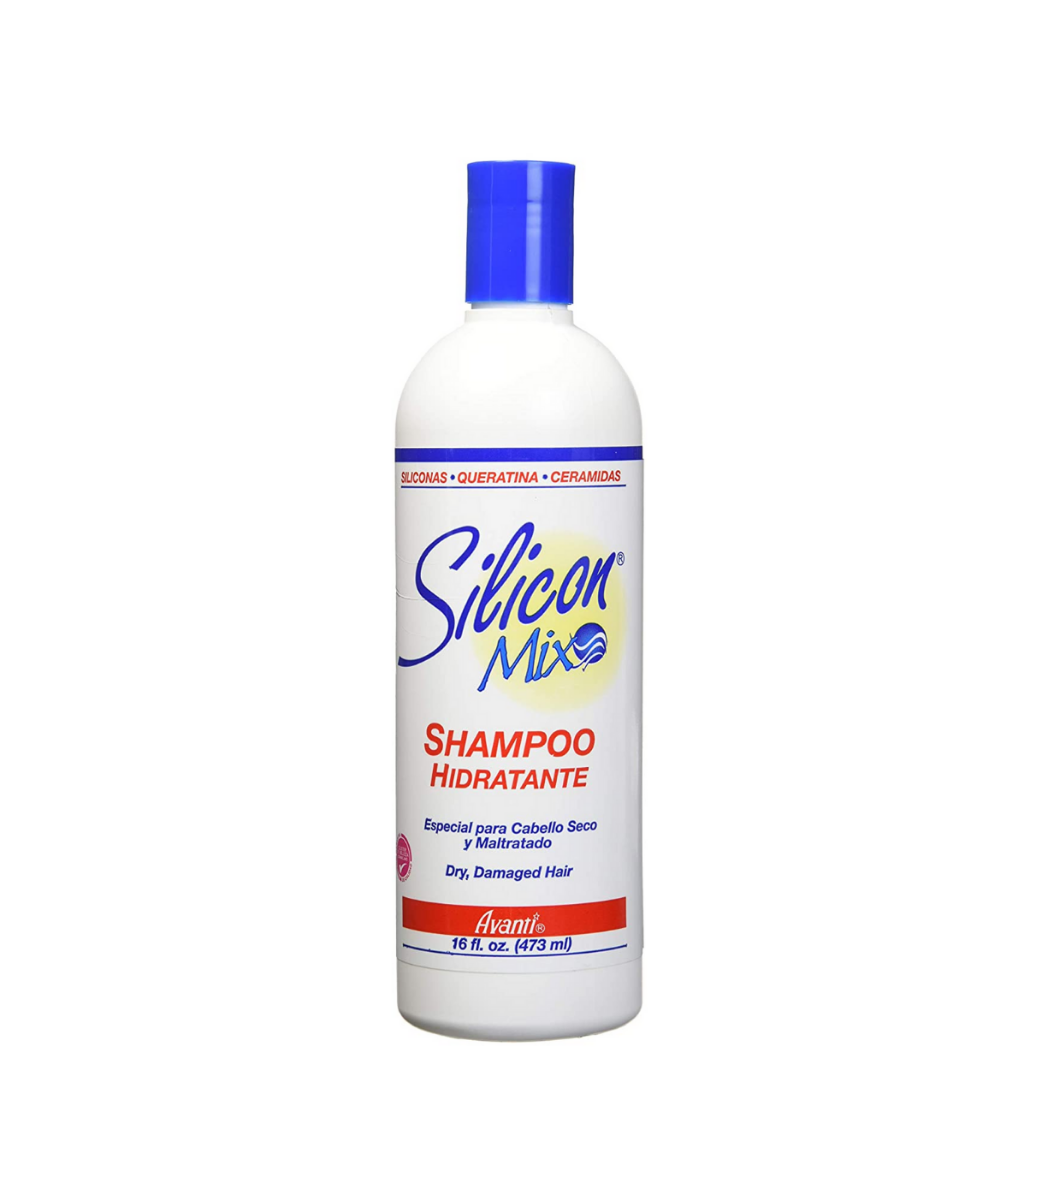 Silicon Mix® Moroccan Argan Oil Shampoo